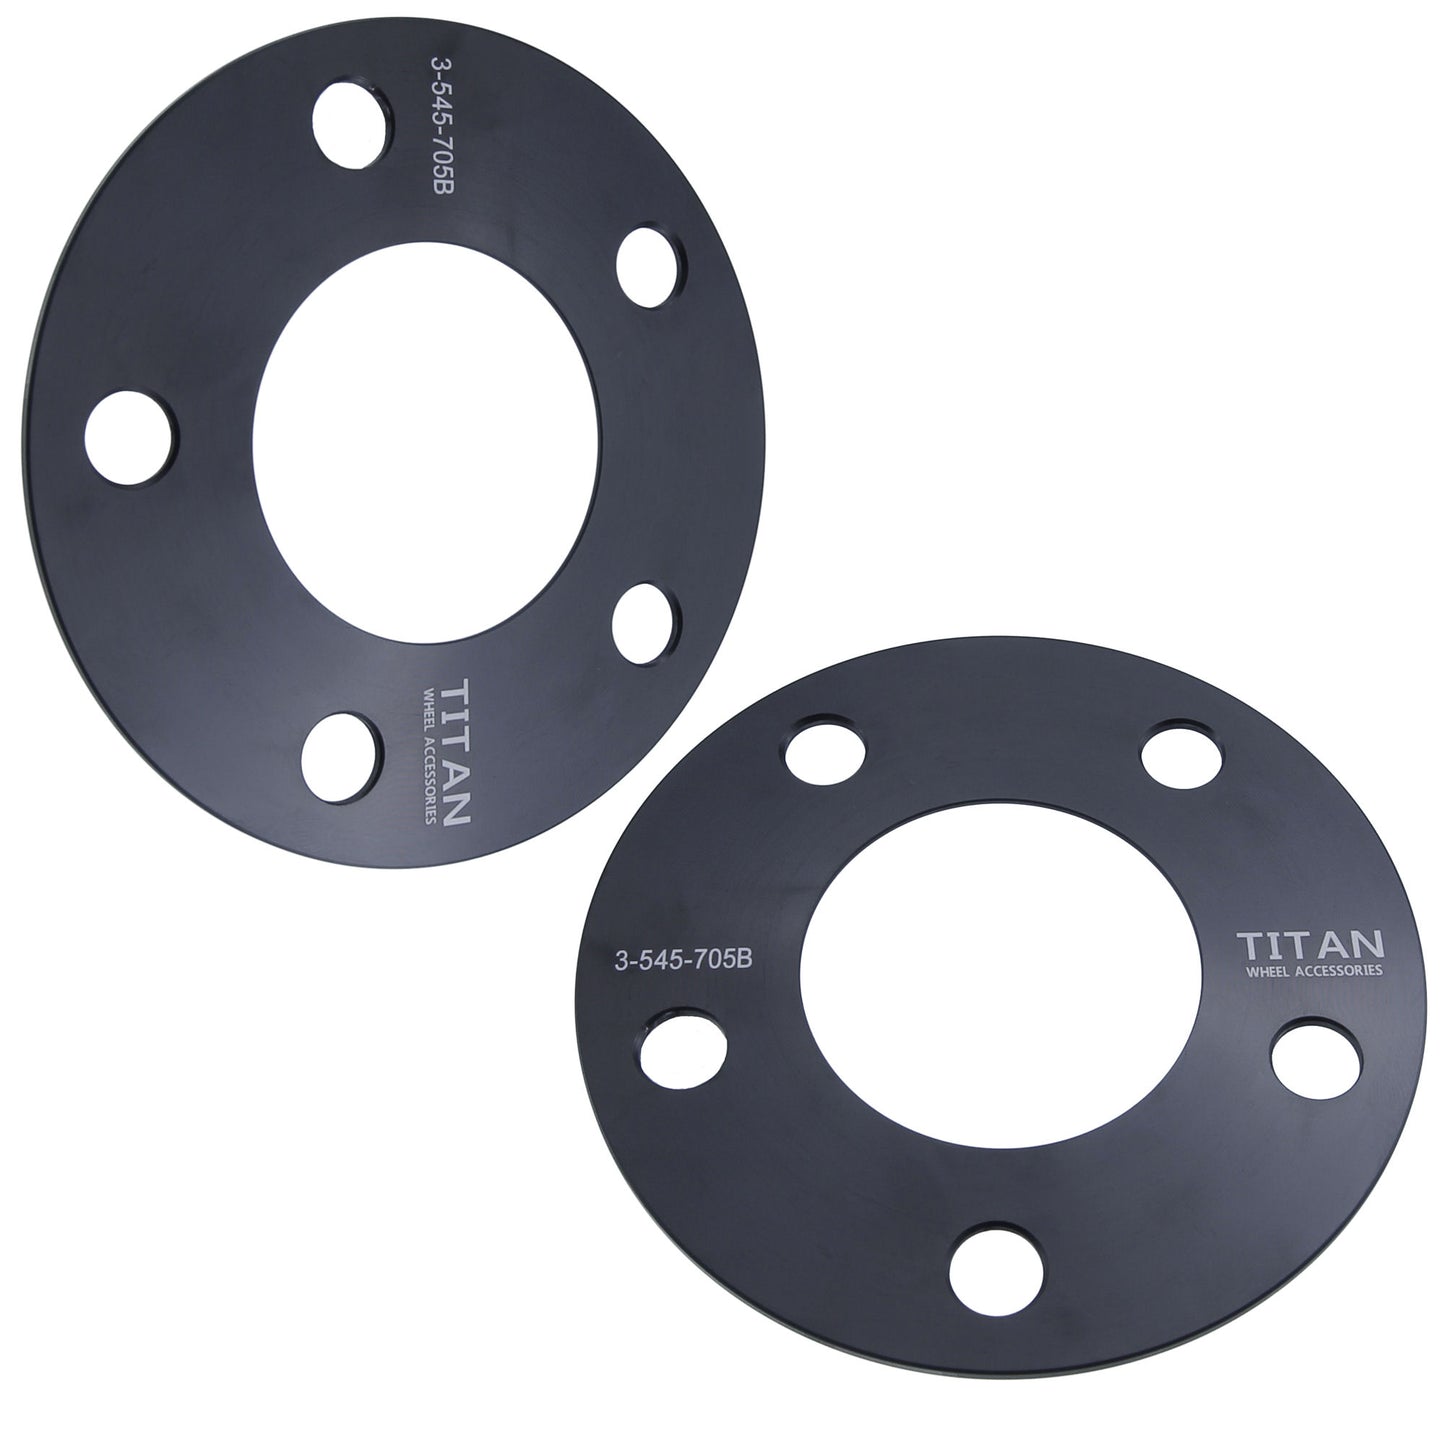 Titan Wheel Accessories | 3mm Titan Wheel Spacers for Ford Mustang Ranger Explorer Edge | 5x114.3 (5x4.5) | 70.5 Hubcentric | | 5 Lug Hubcentric Wheel Spacers